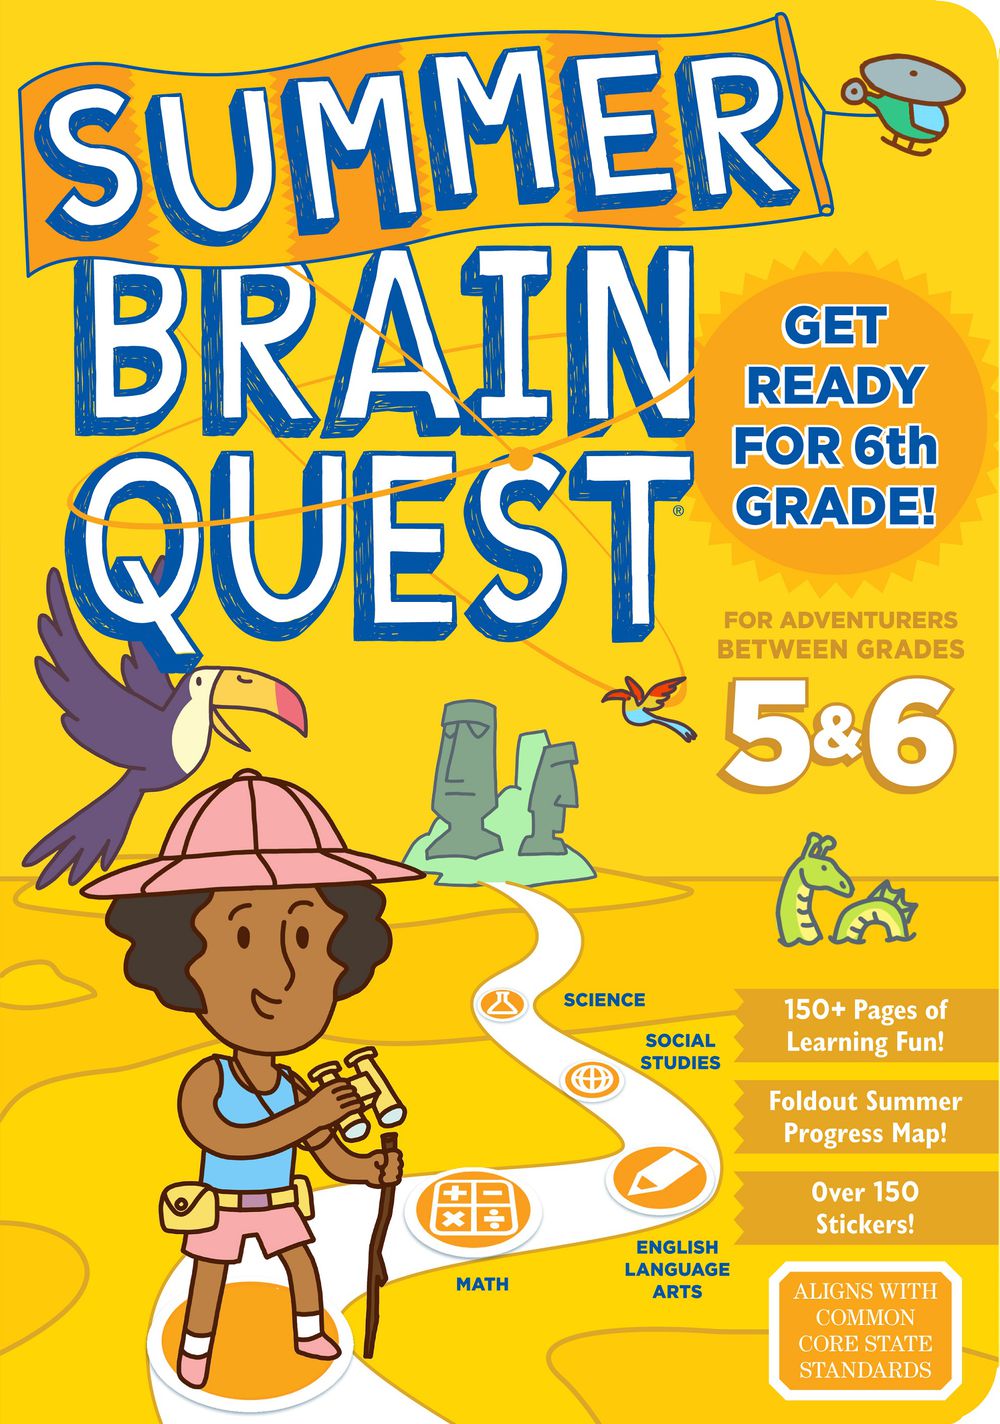 Summer Brain Quest－Between Grades 5 & 6